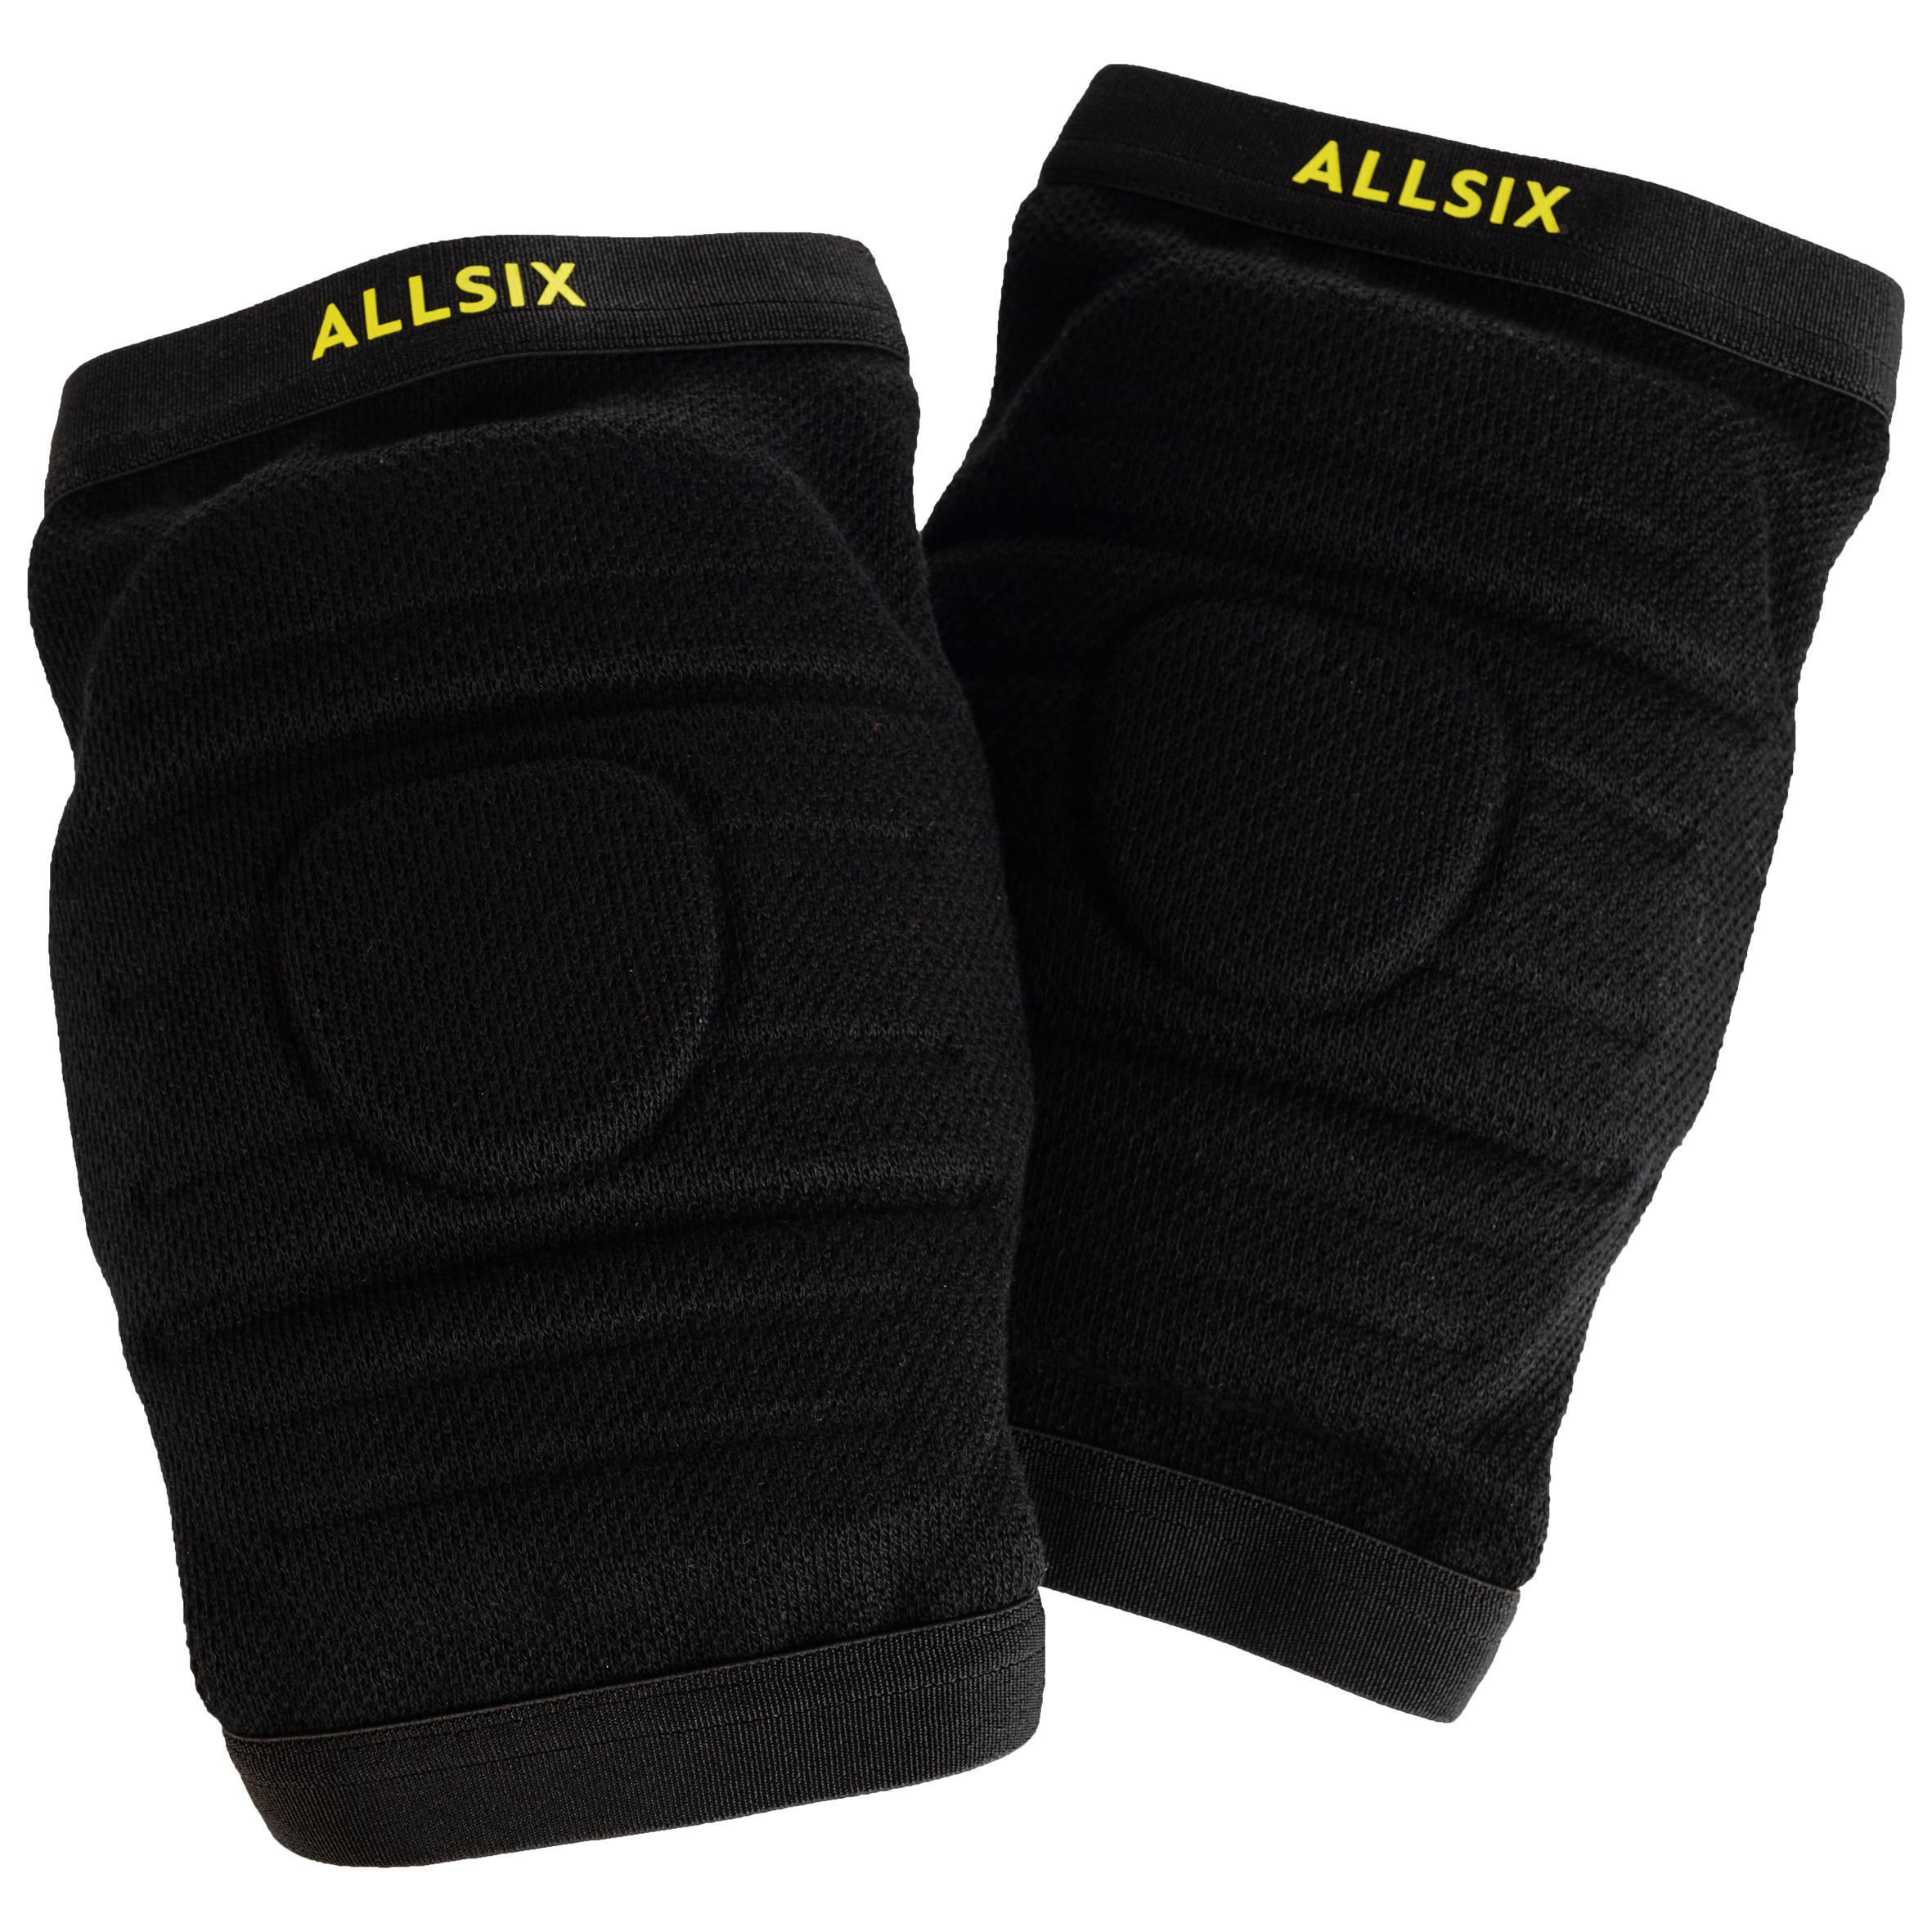 ALLSIX Volleyball Knee Pads VKP900 - Black